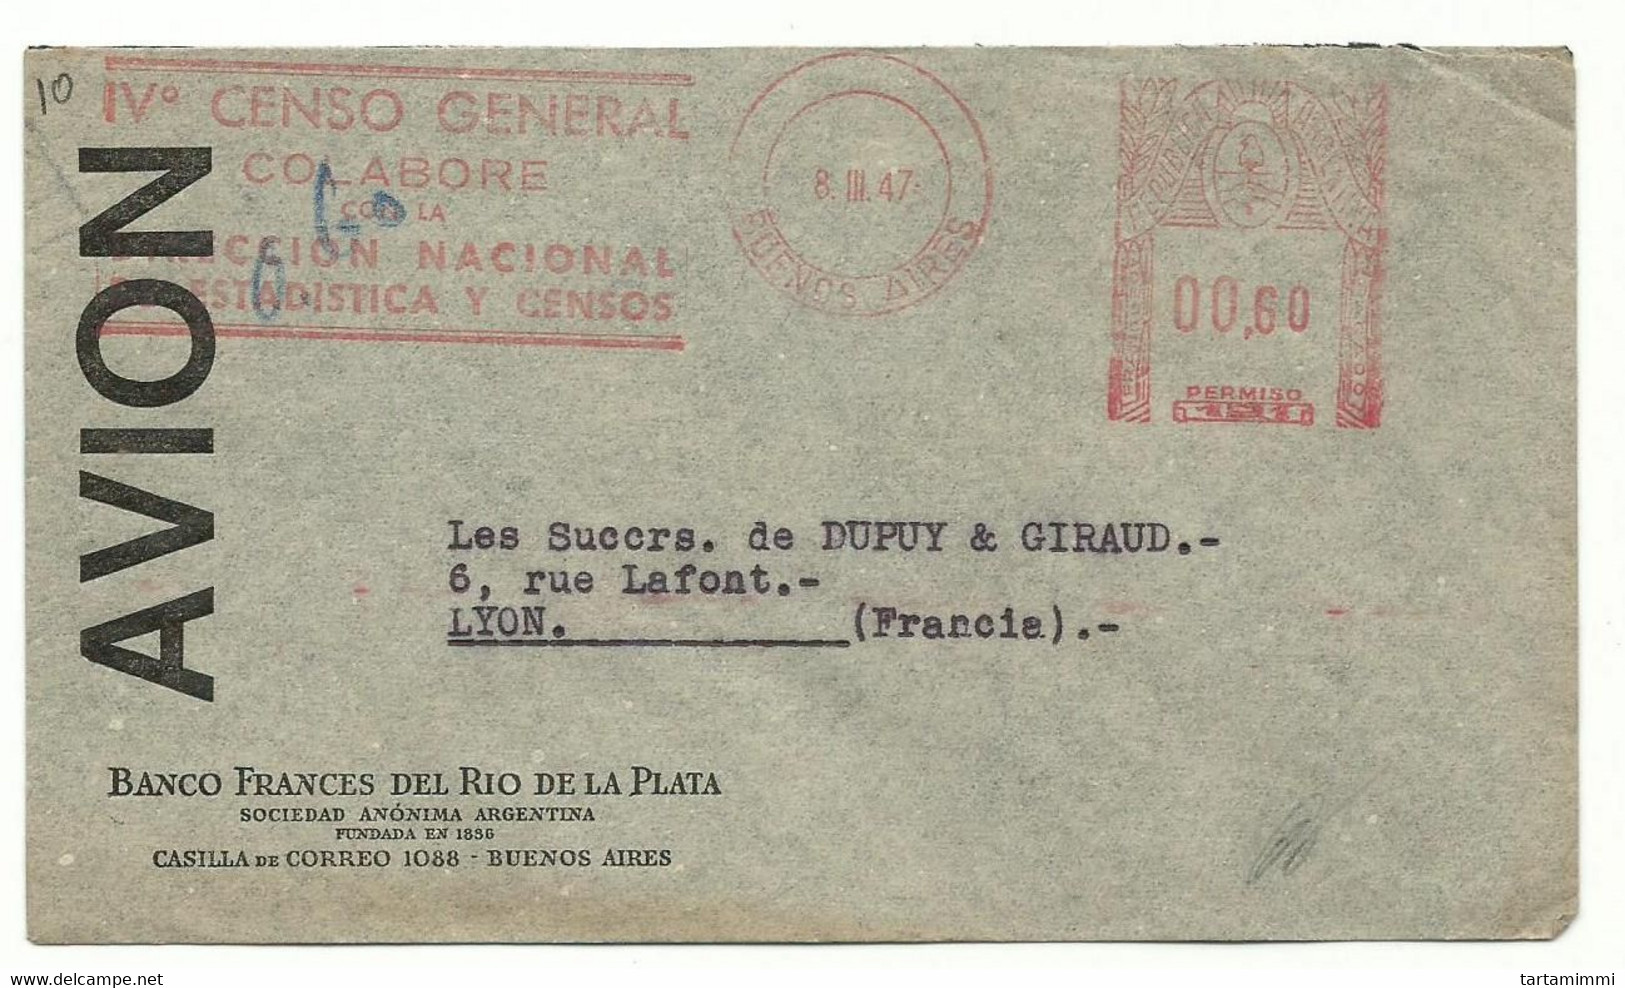 EMA METER STAMP FREISTEMPEL TYPE GA1 ARGENTINA BUENOS AIRES 1947 IV° CENSO GENERAL - Vignettes D'affranchissement (Frama)